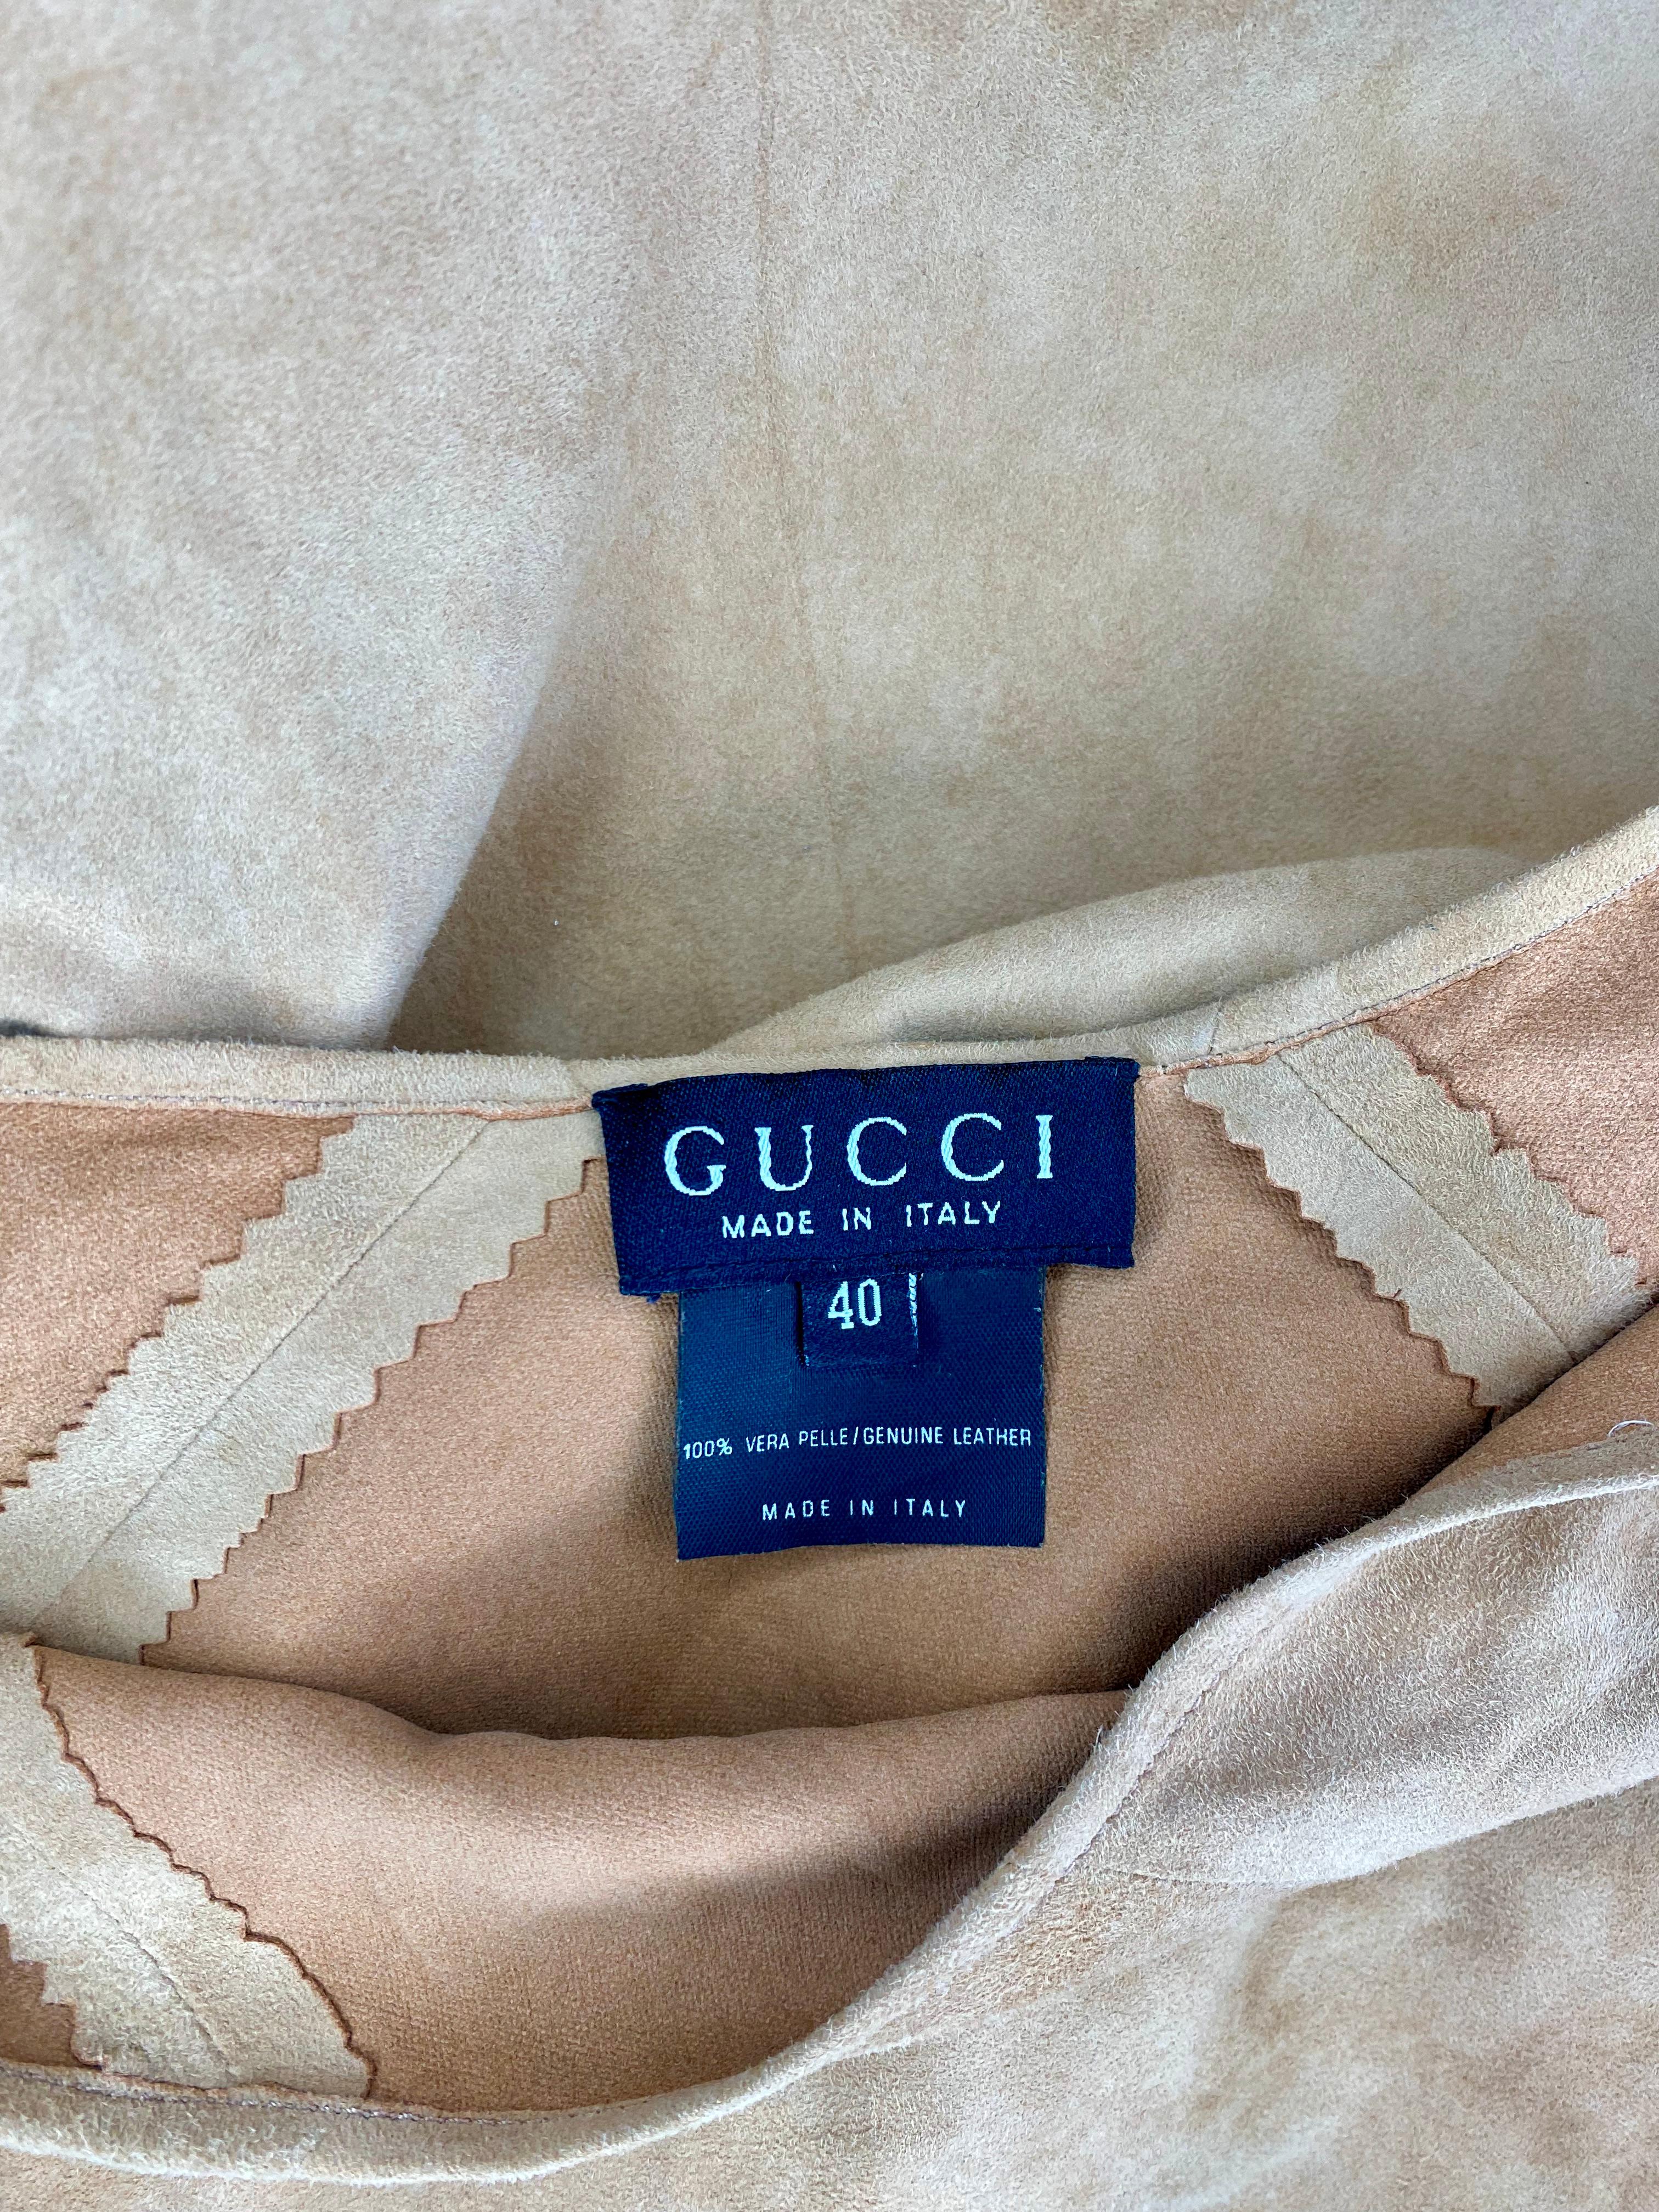 S/S 1993 Gucci Runway Beige Suede Tassel Fringe Wrap Pareo Skirt 6